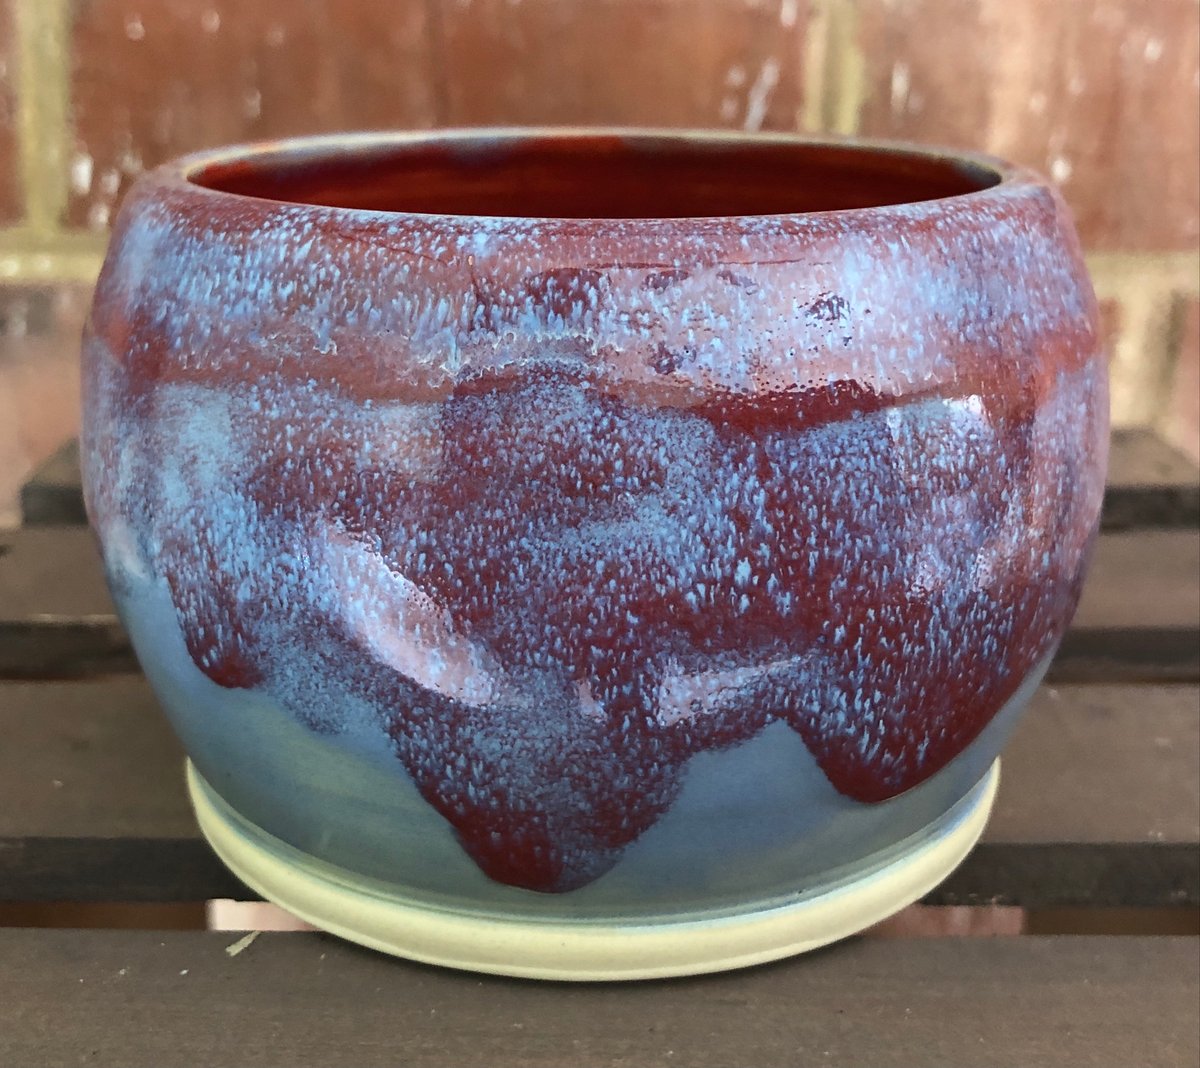 Potters Choice Glaze Combinations